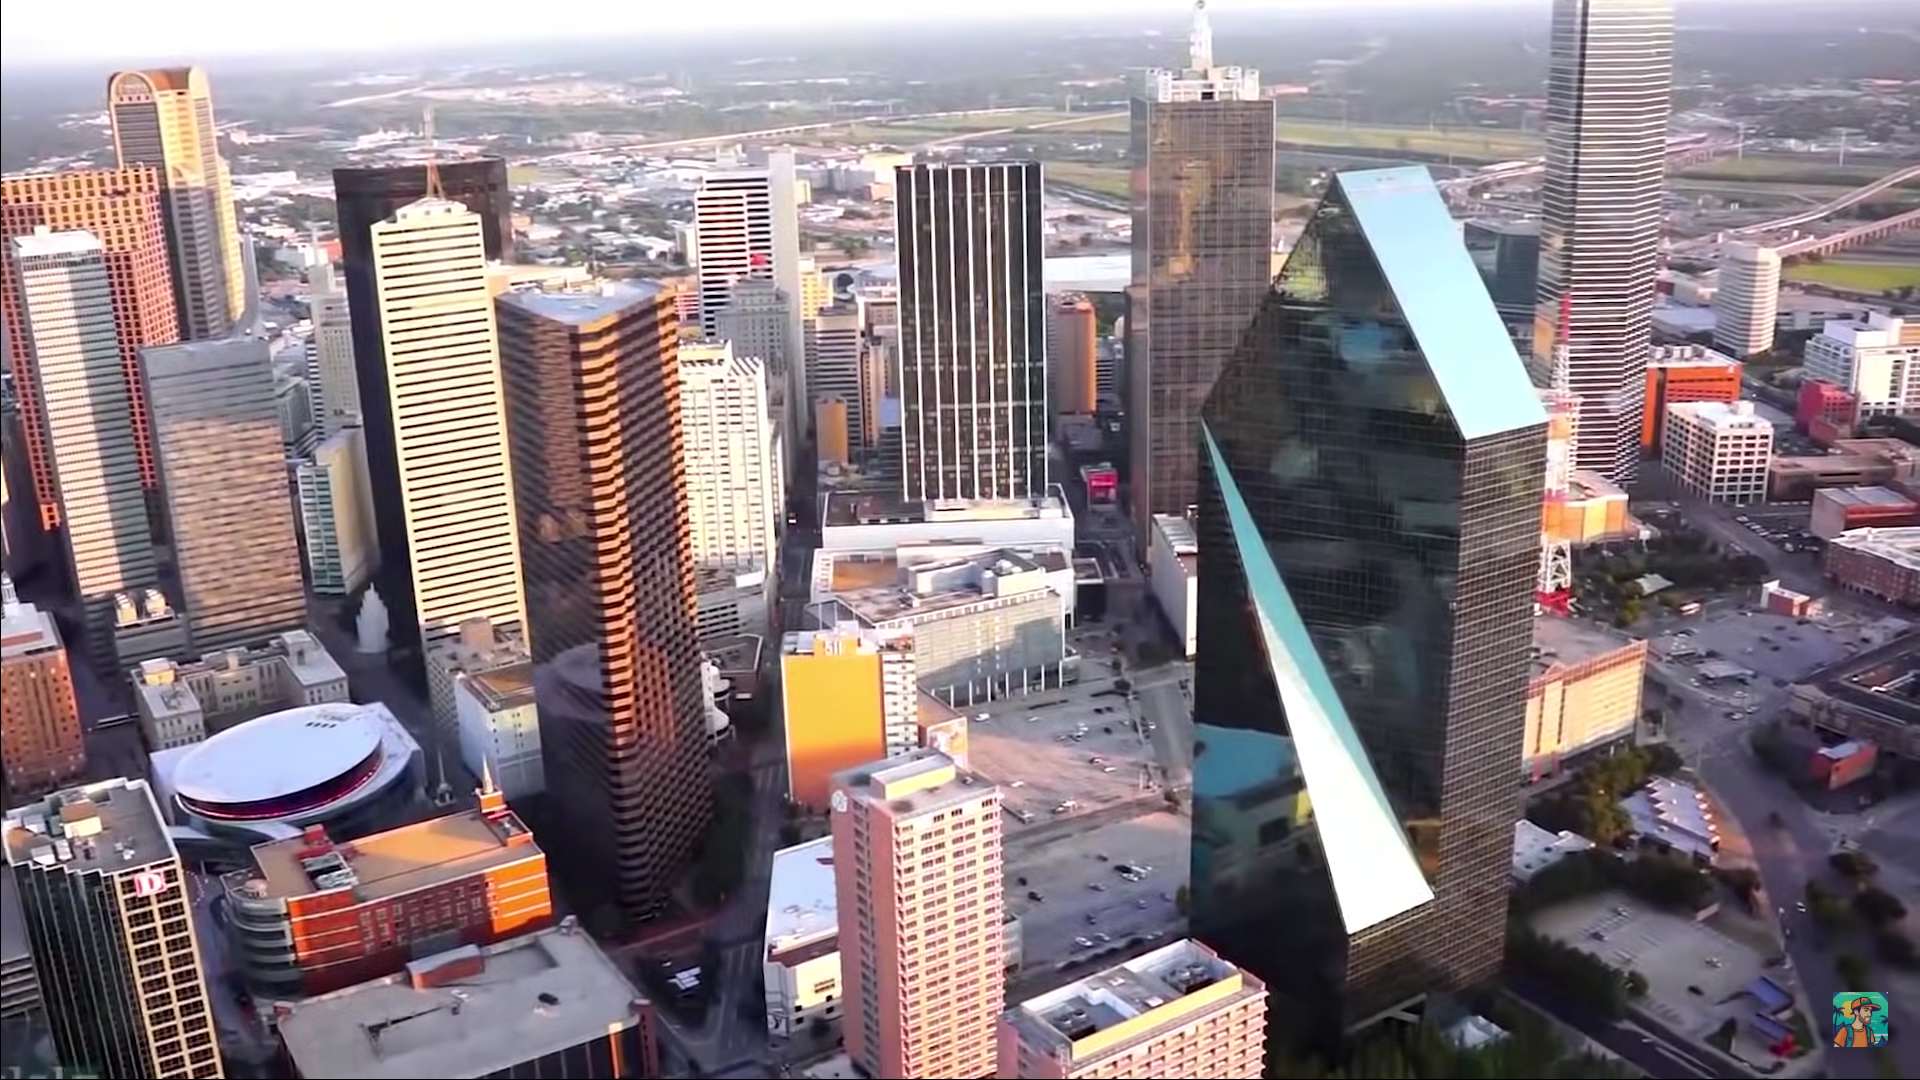 Birds eye view of Dallas